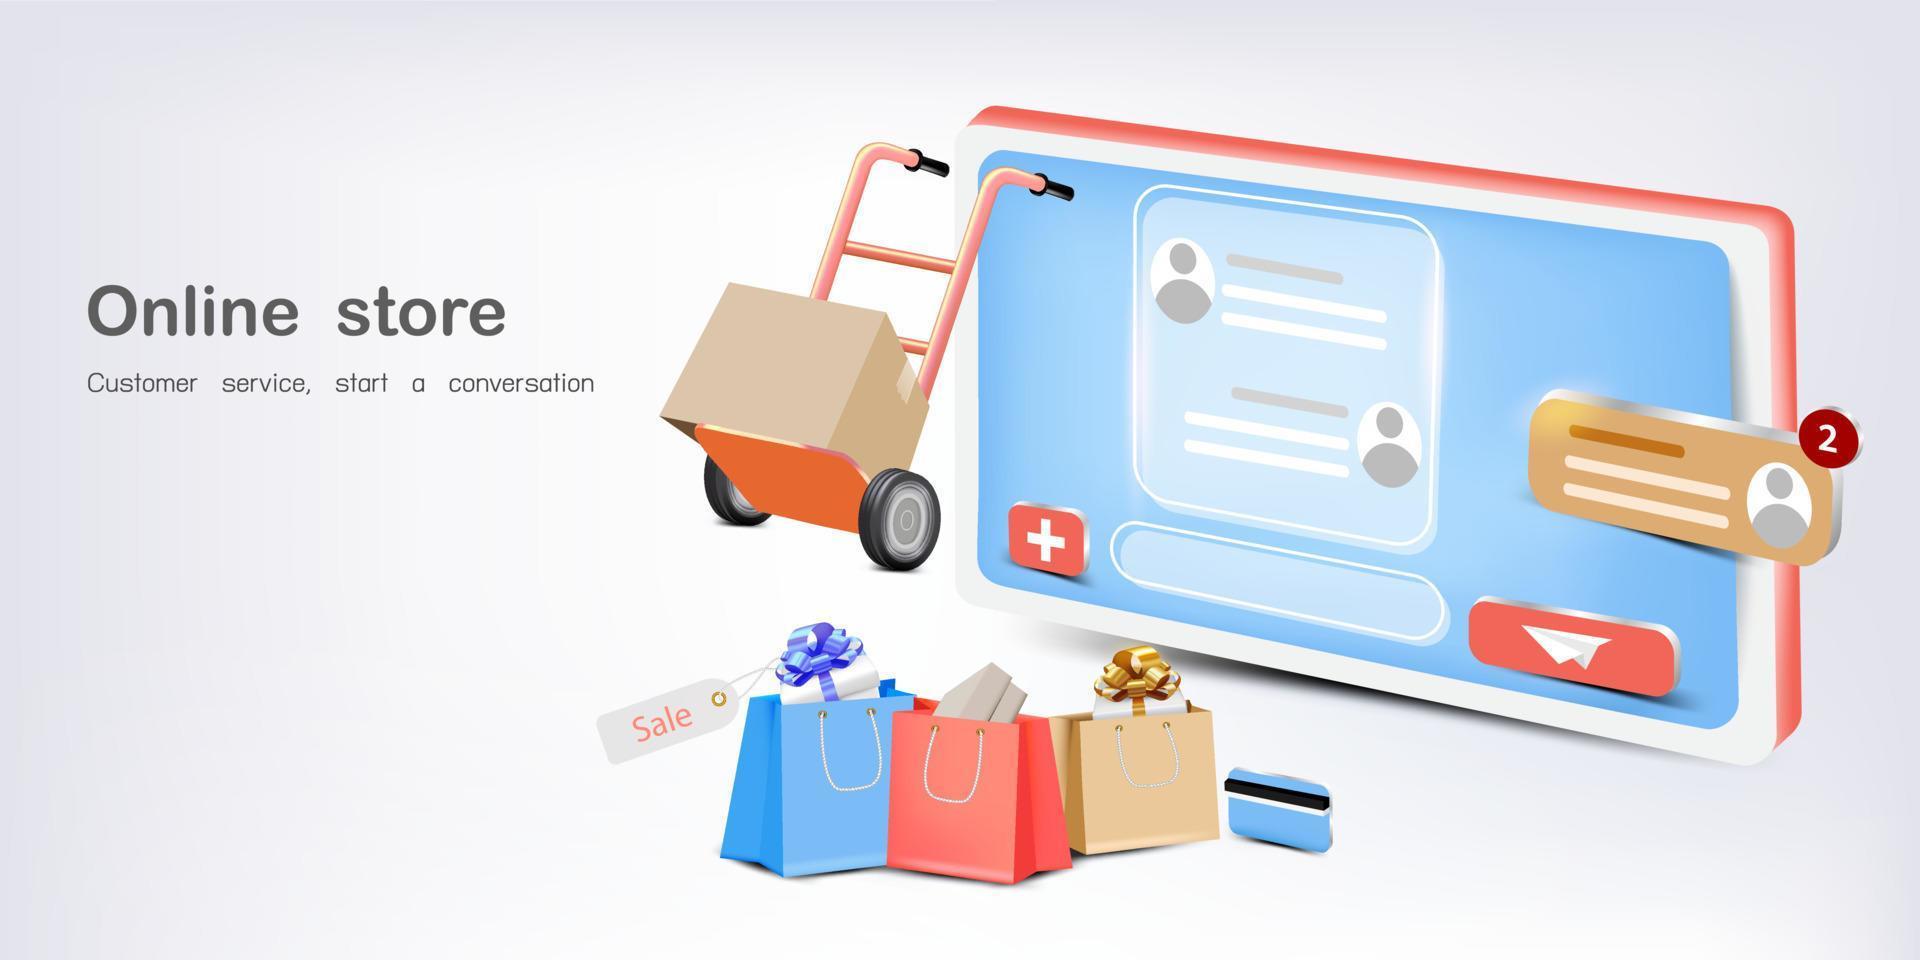 messaggi con shopping bag e card per lo shopping online vettore